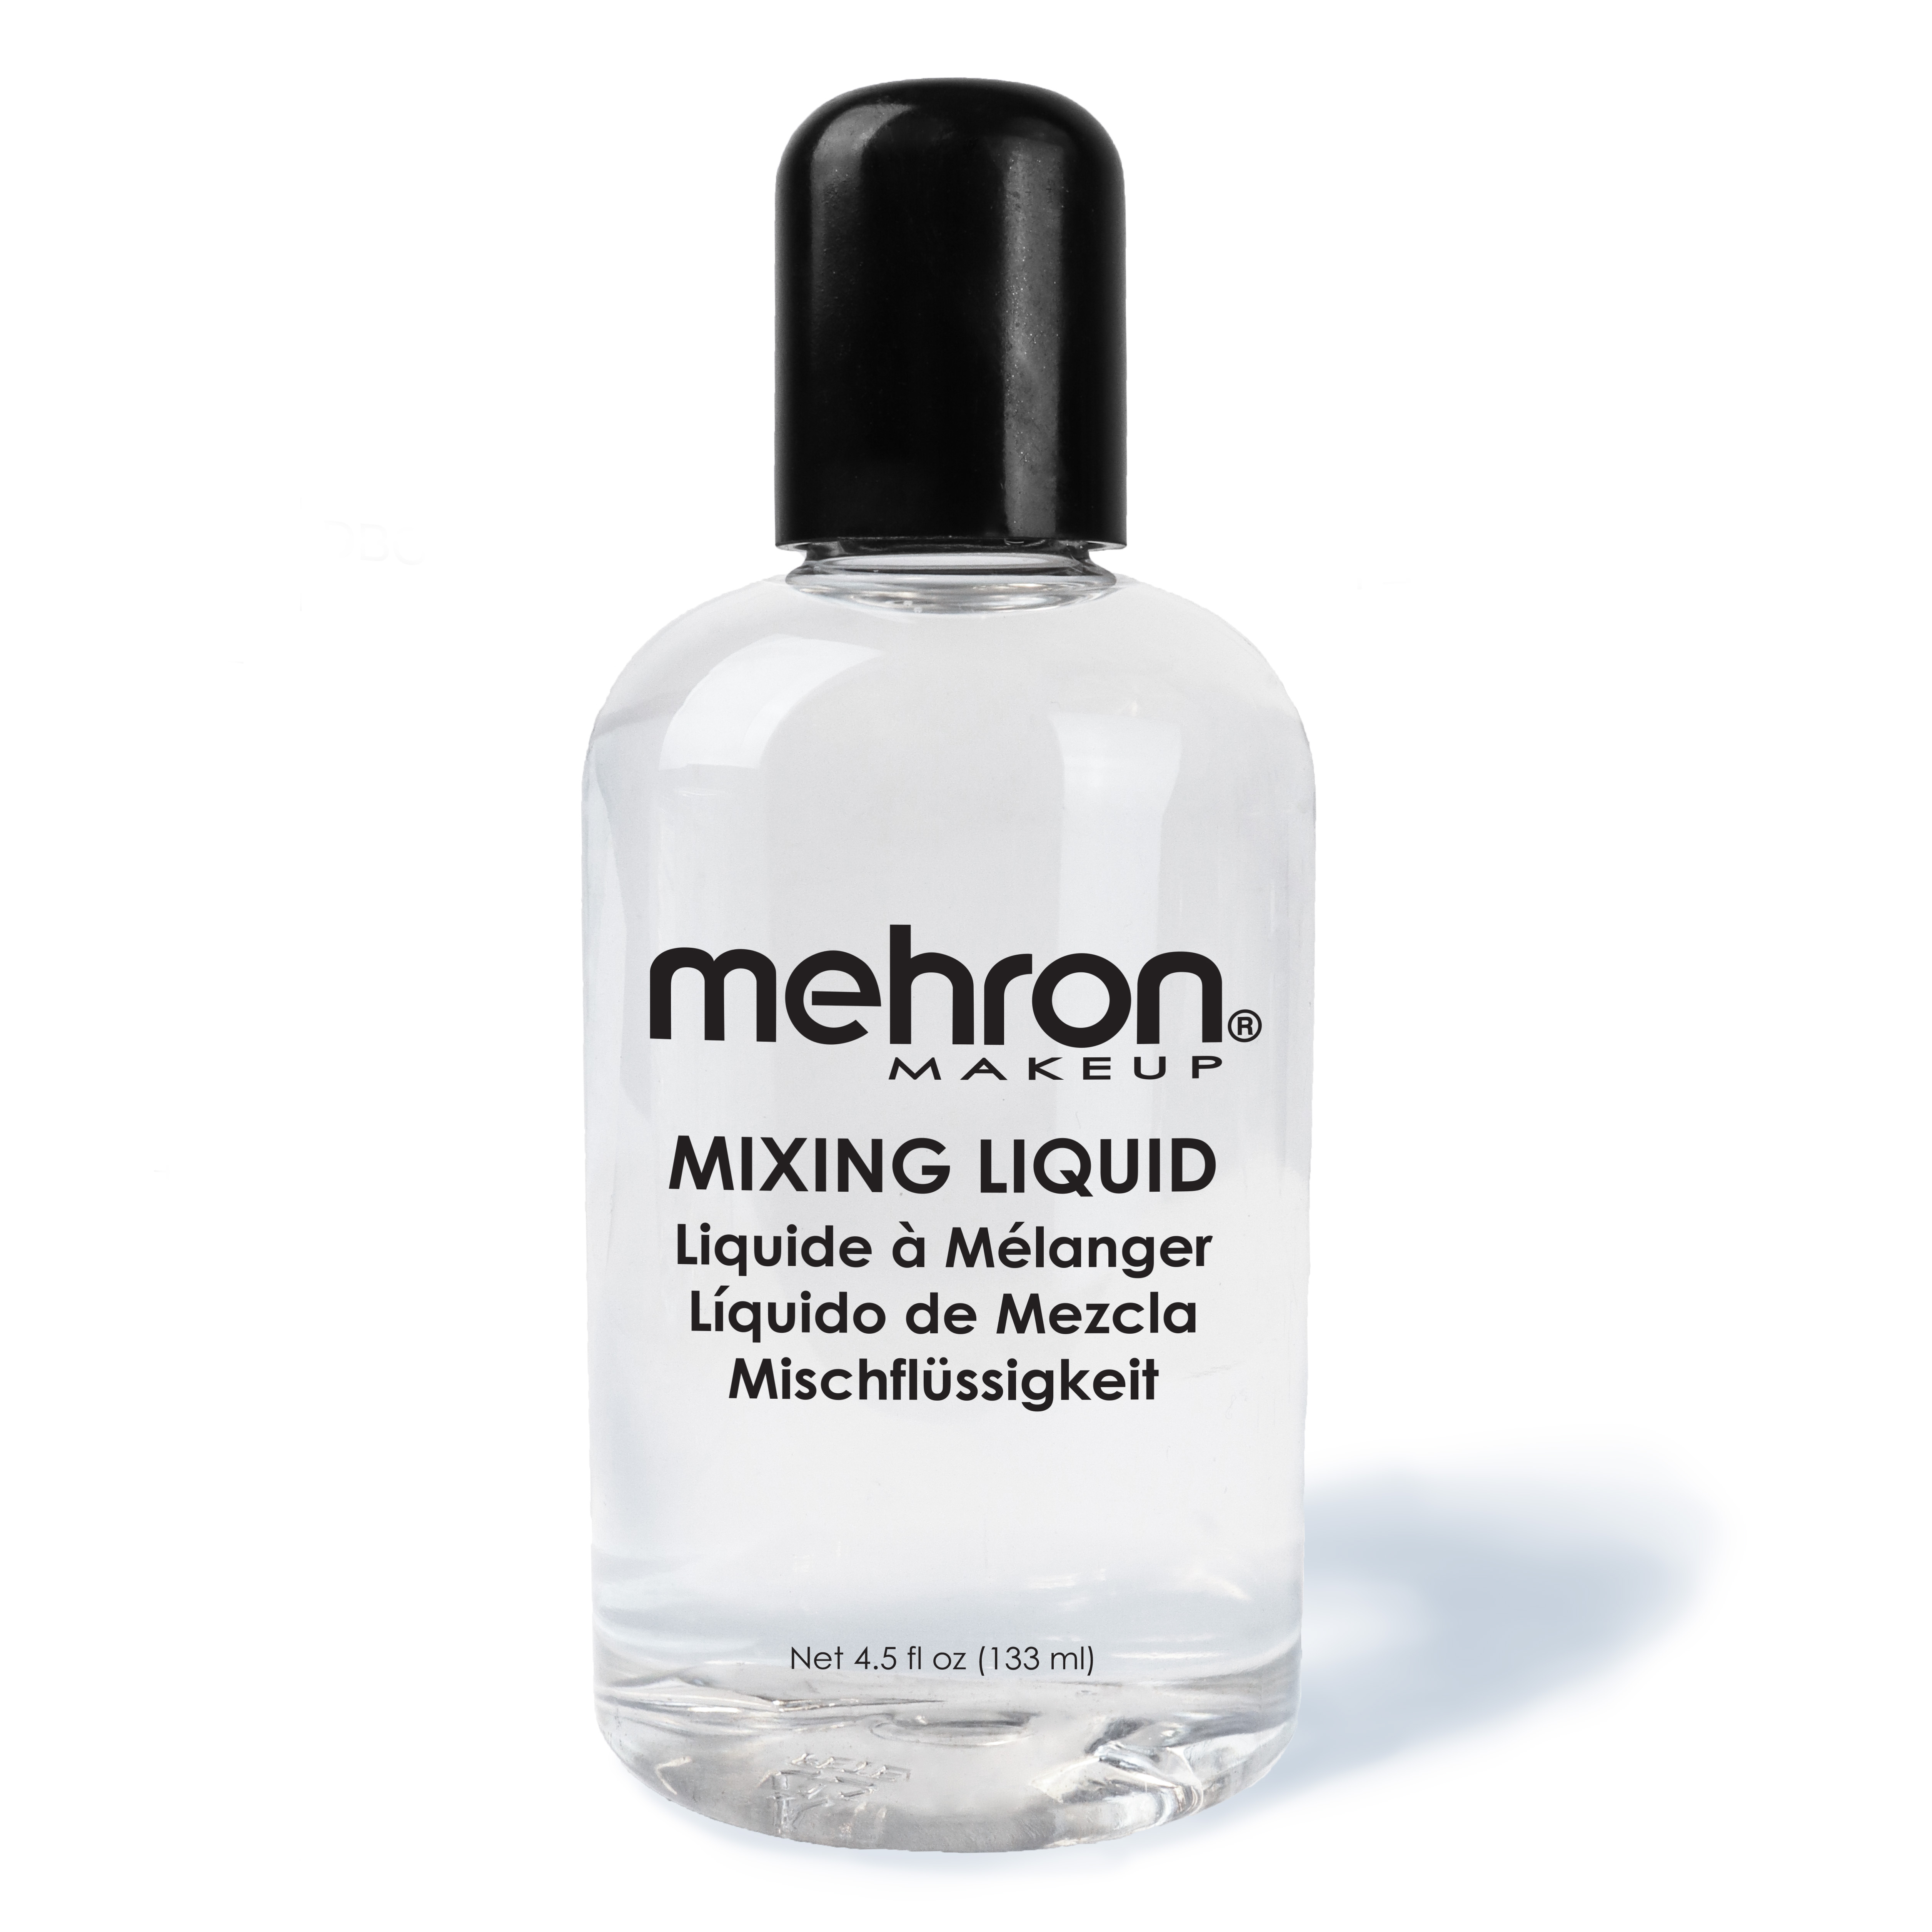 Mehron Barrier Spray - Makeup Sealer and Setting Spray (2 Ounce) 2 Fl Oz  (Pack of 1)